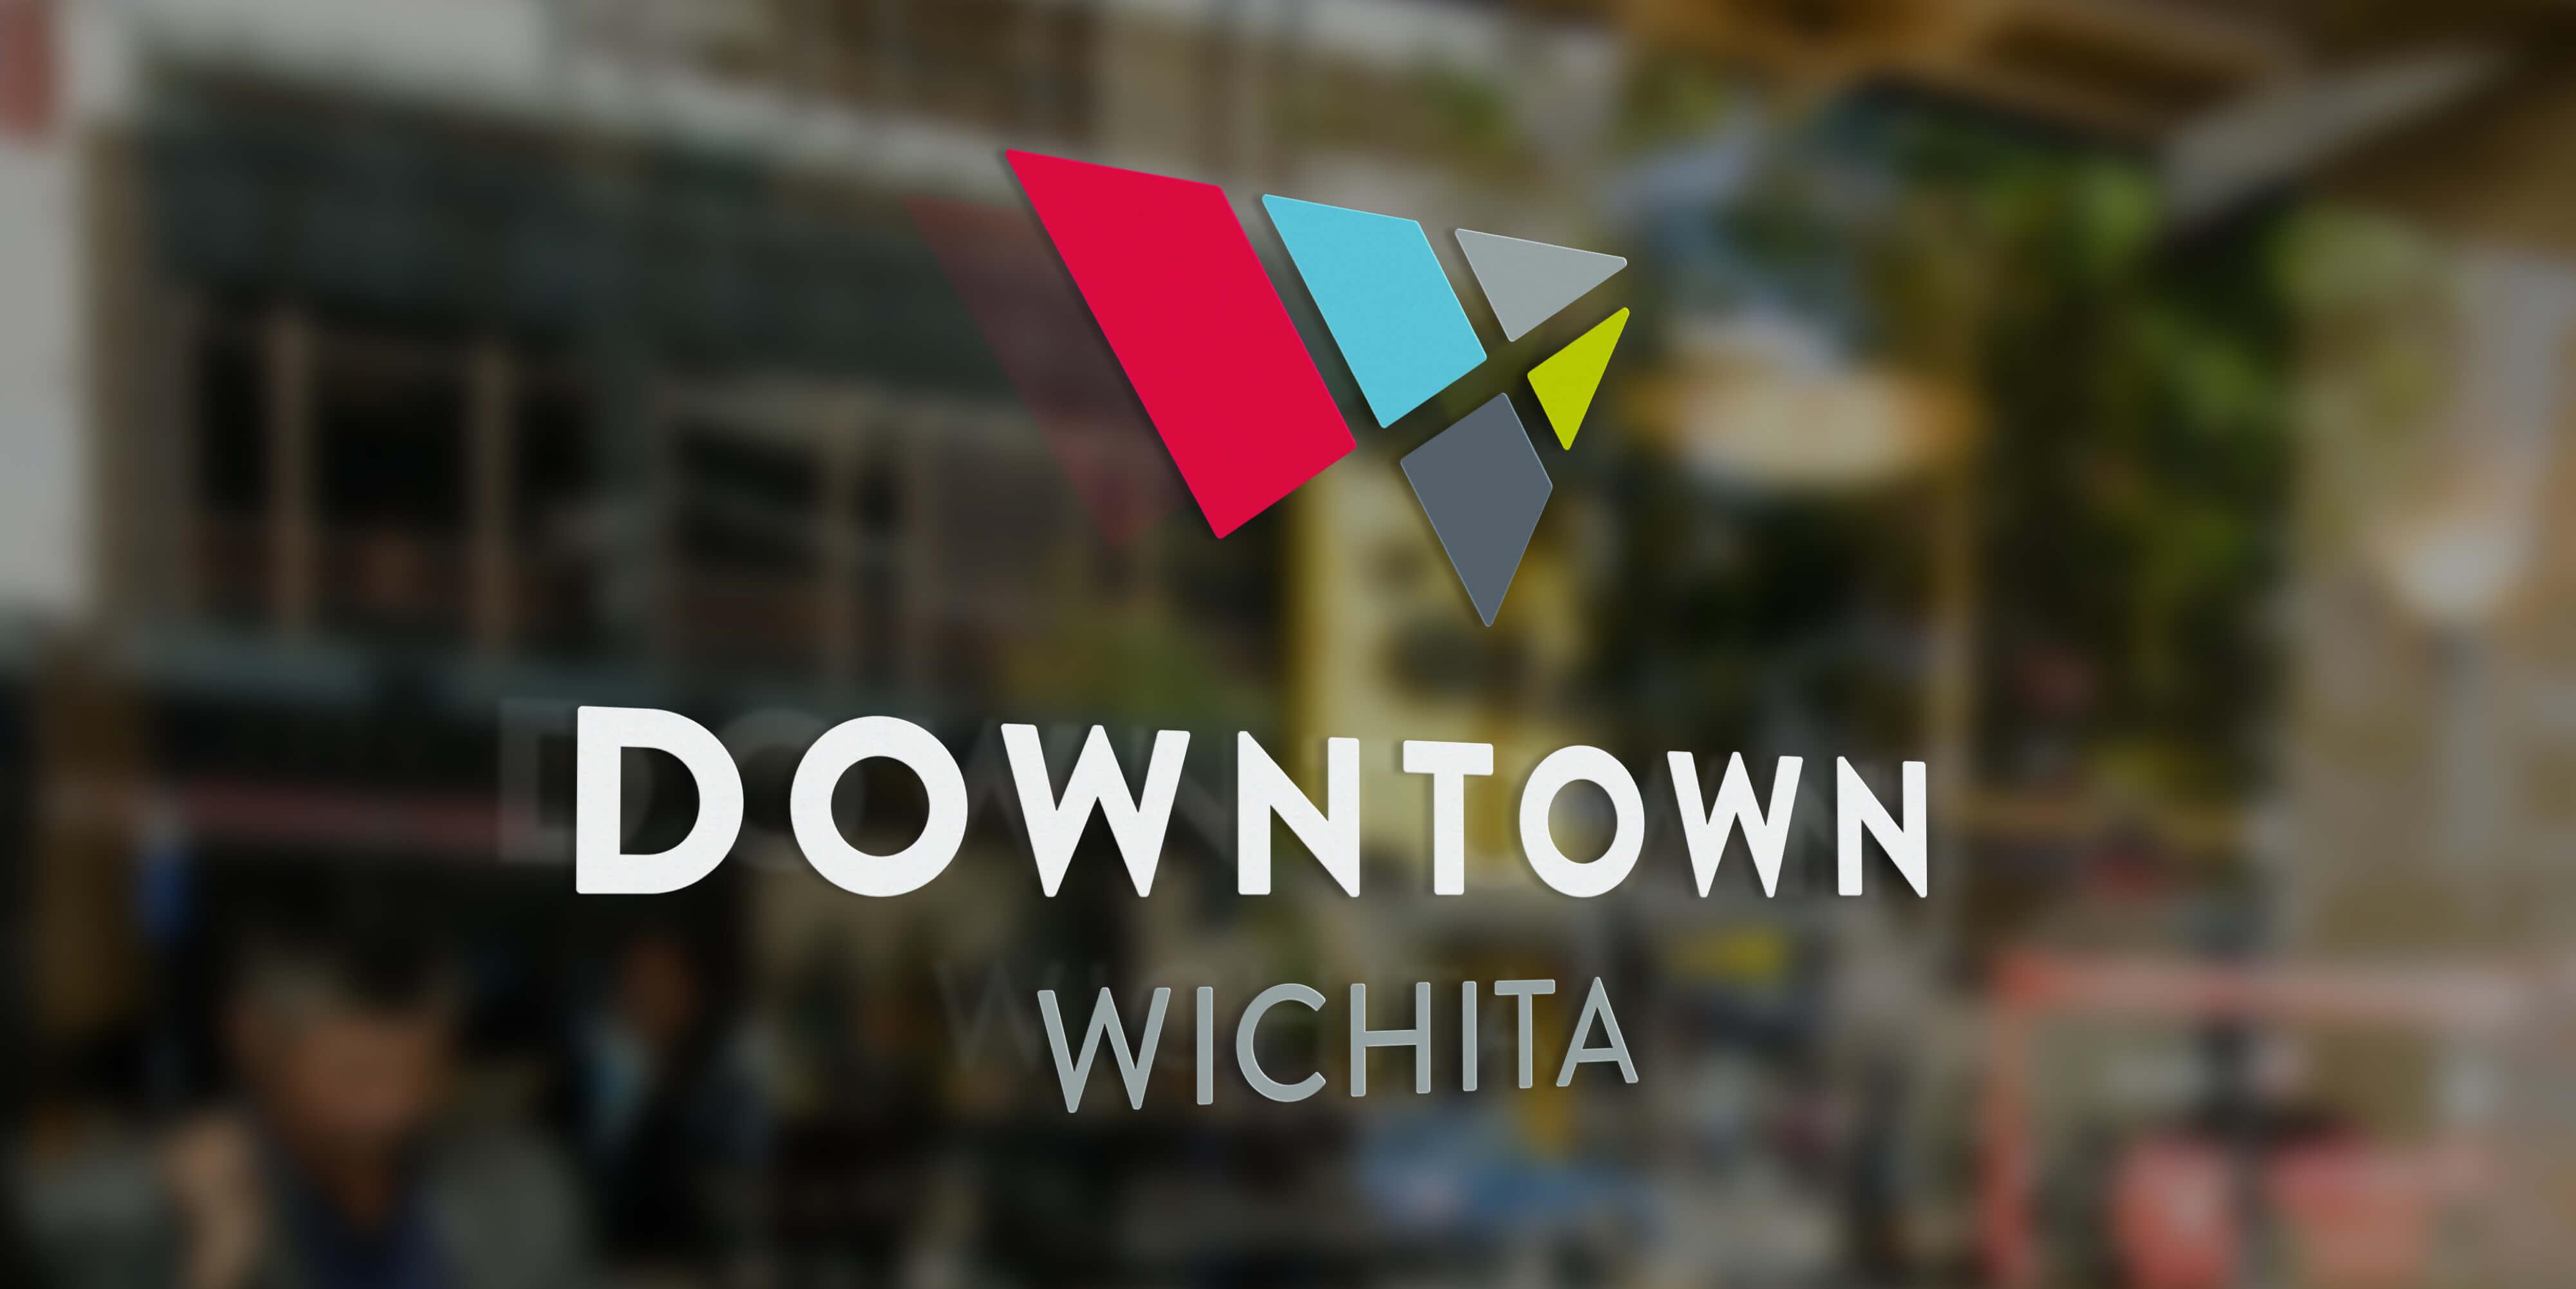 Downtown Wichita branded window decal image